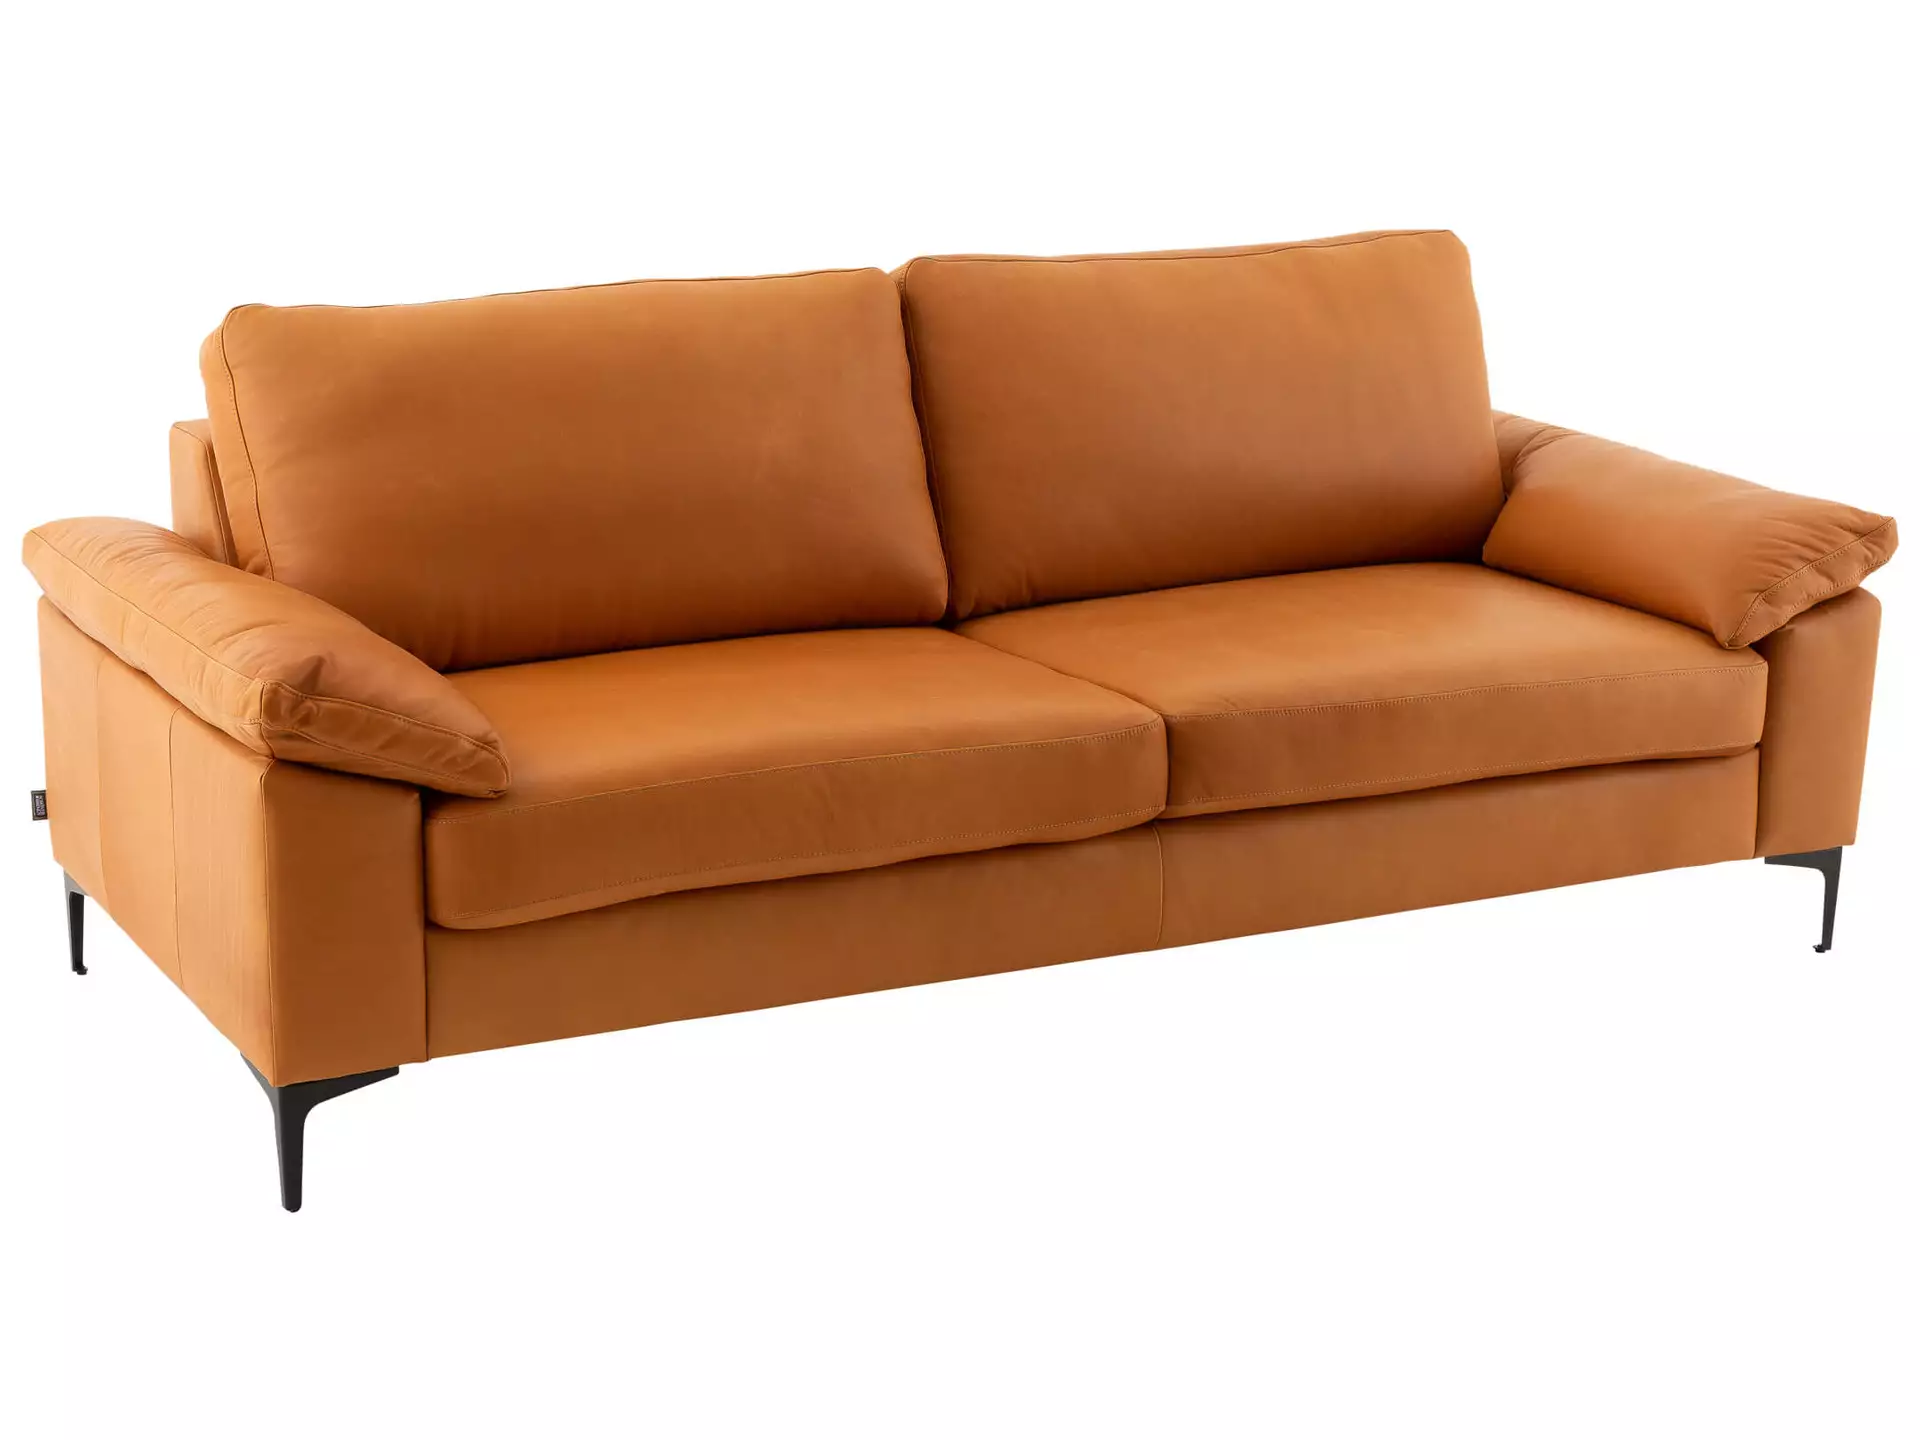 Sofa Timeless B: 224 cm Candy/ Farbe: Cognac / Masse (BxT) :224x97 cm